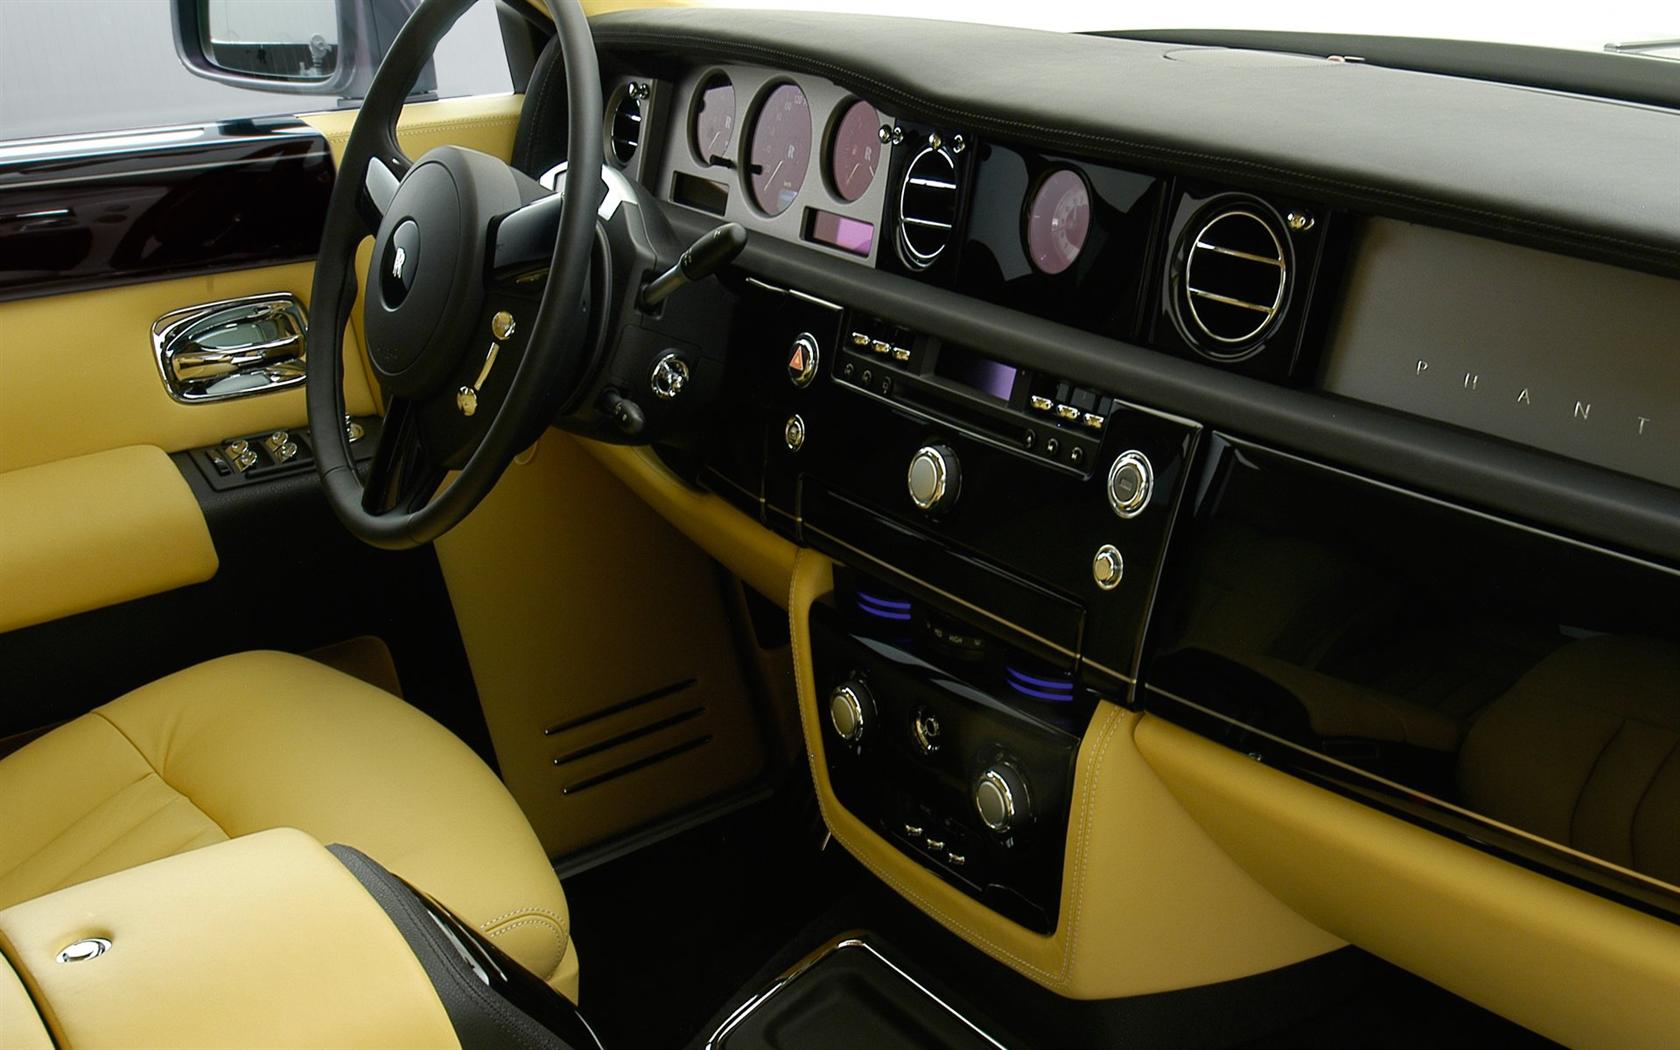 2012 Rolls-Royce Phantom